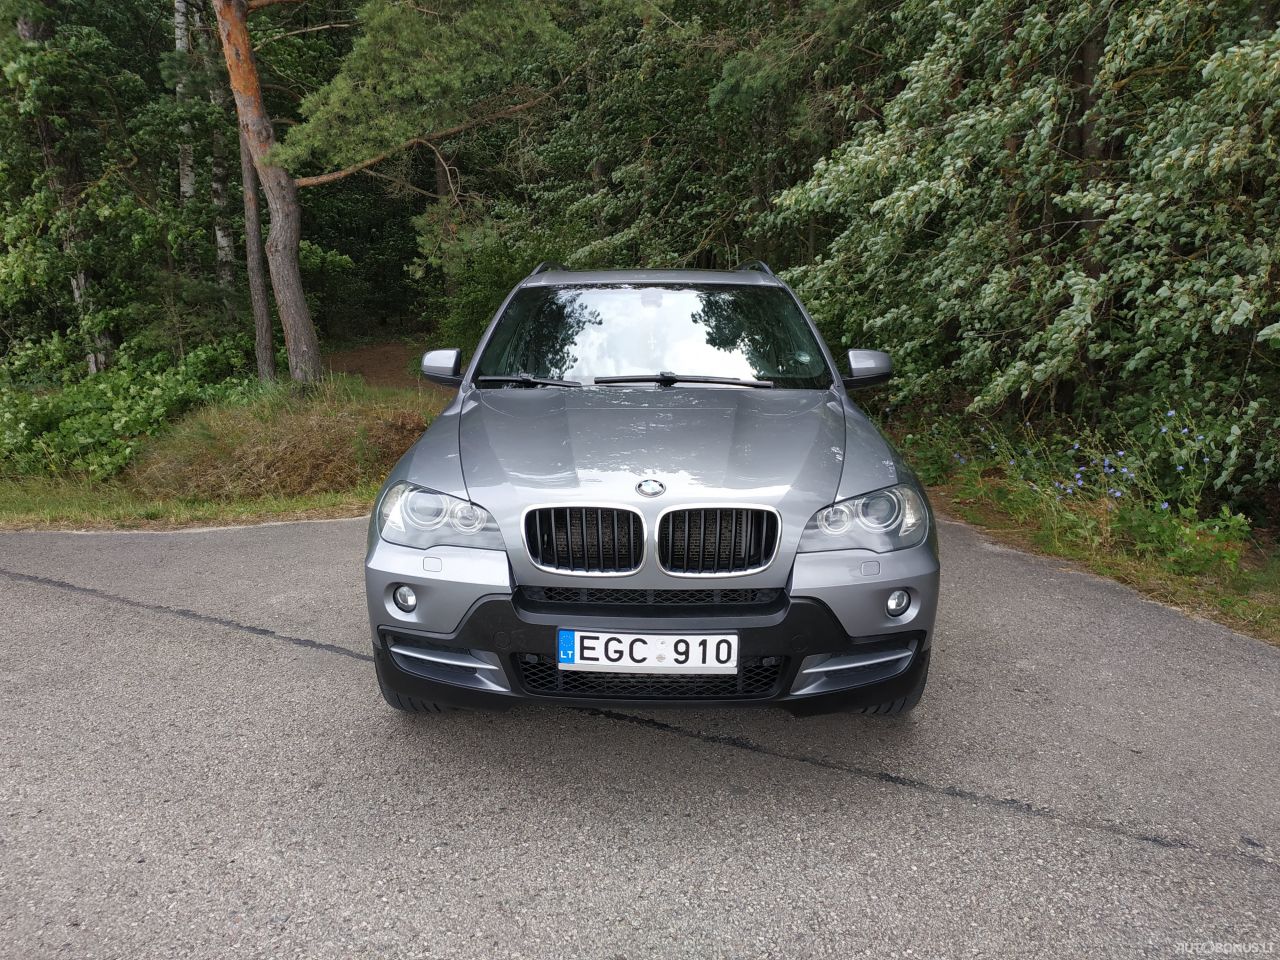 BMW X5, 3.0 l., cross-country